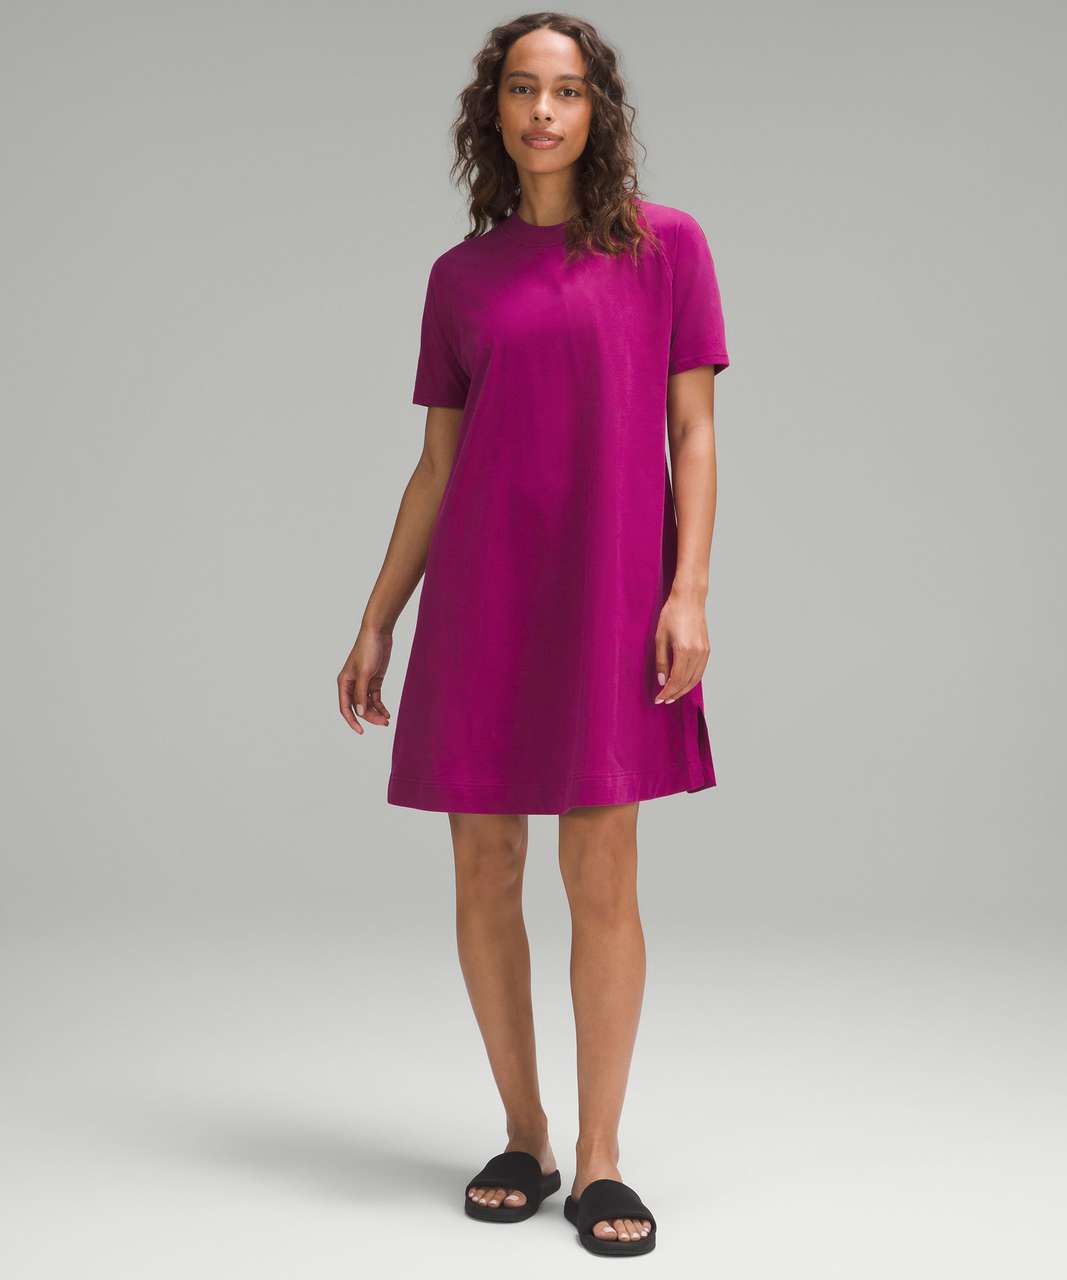 Lululemon Heavyweight Cotton T-Shirt Dress - Magenta Purple